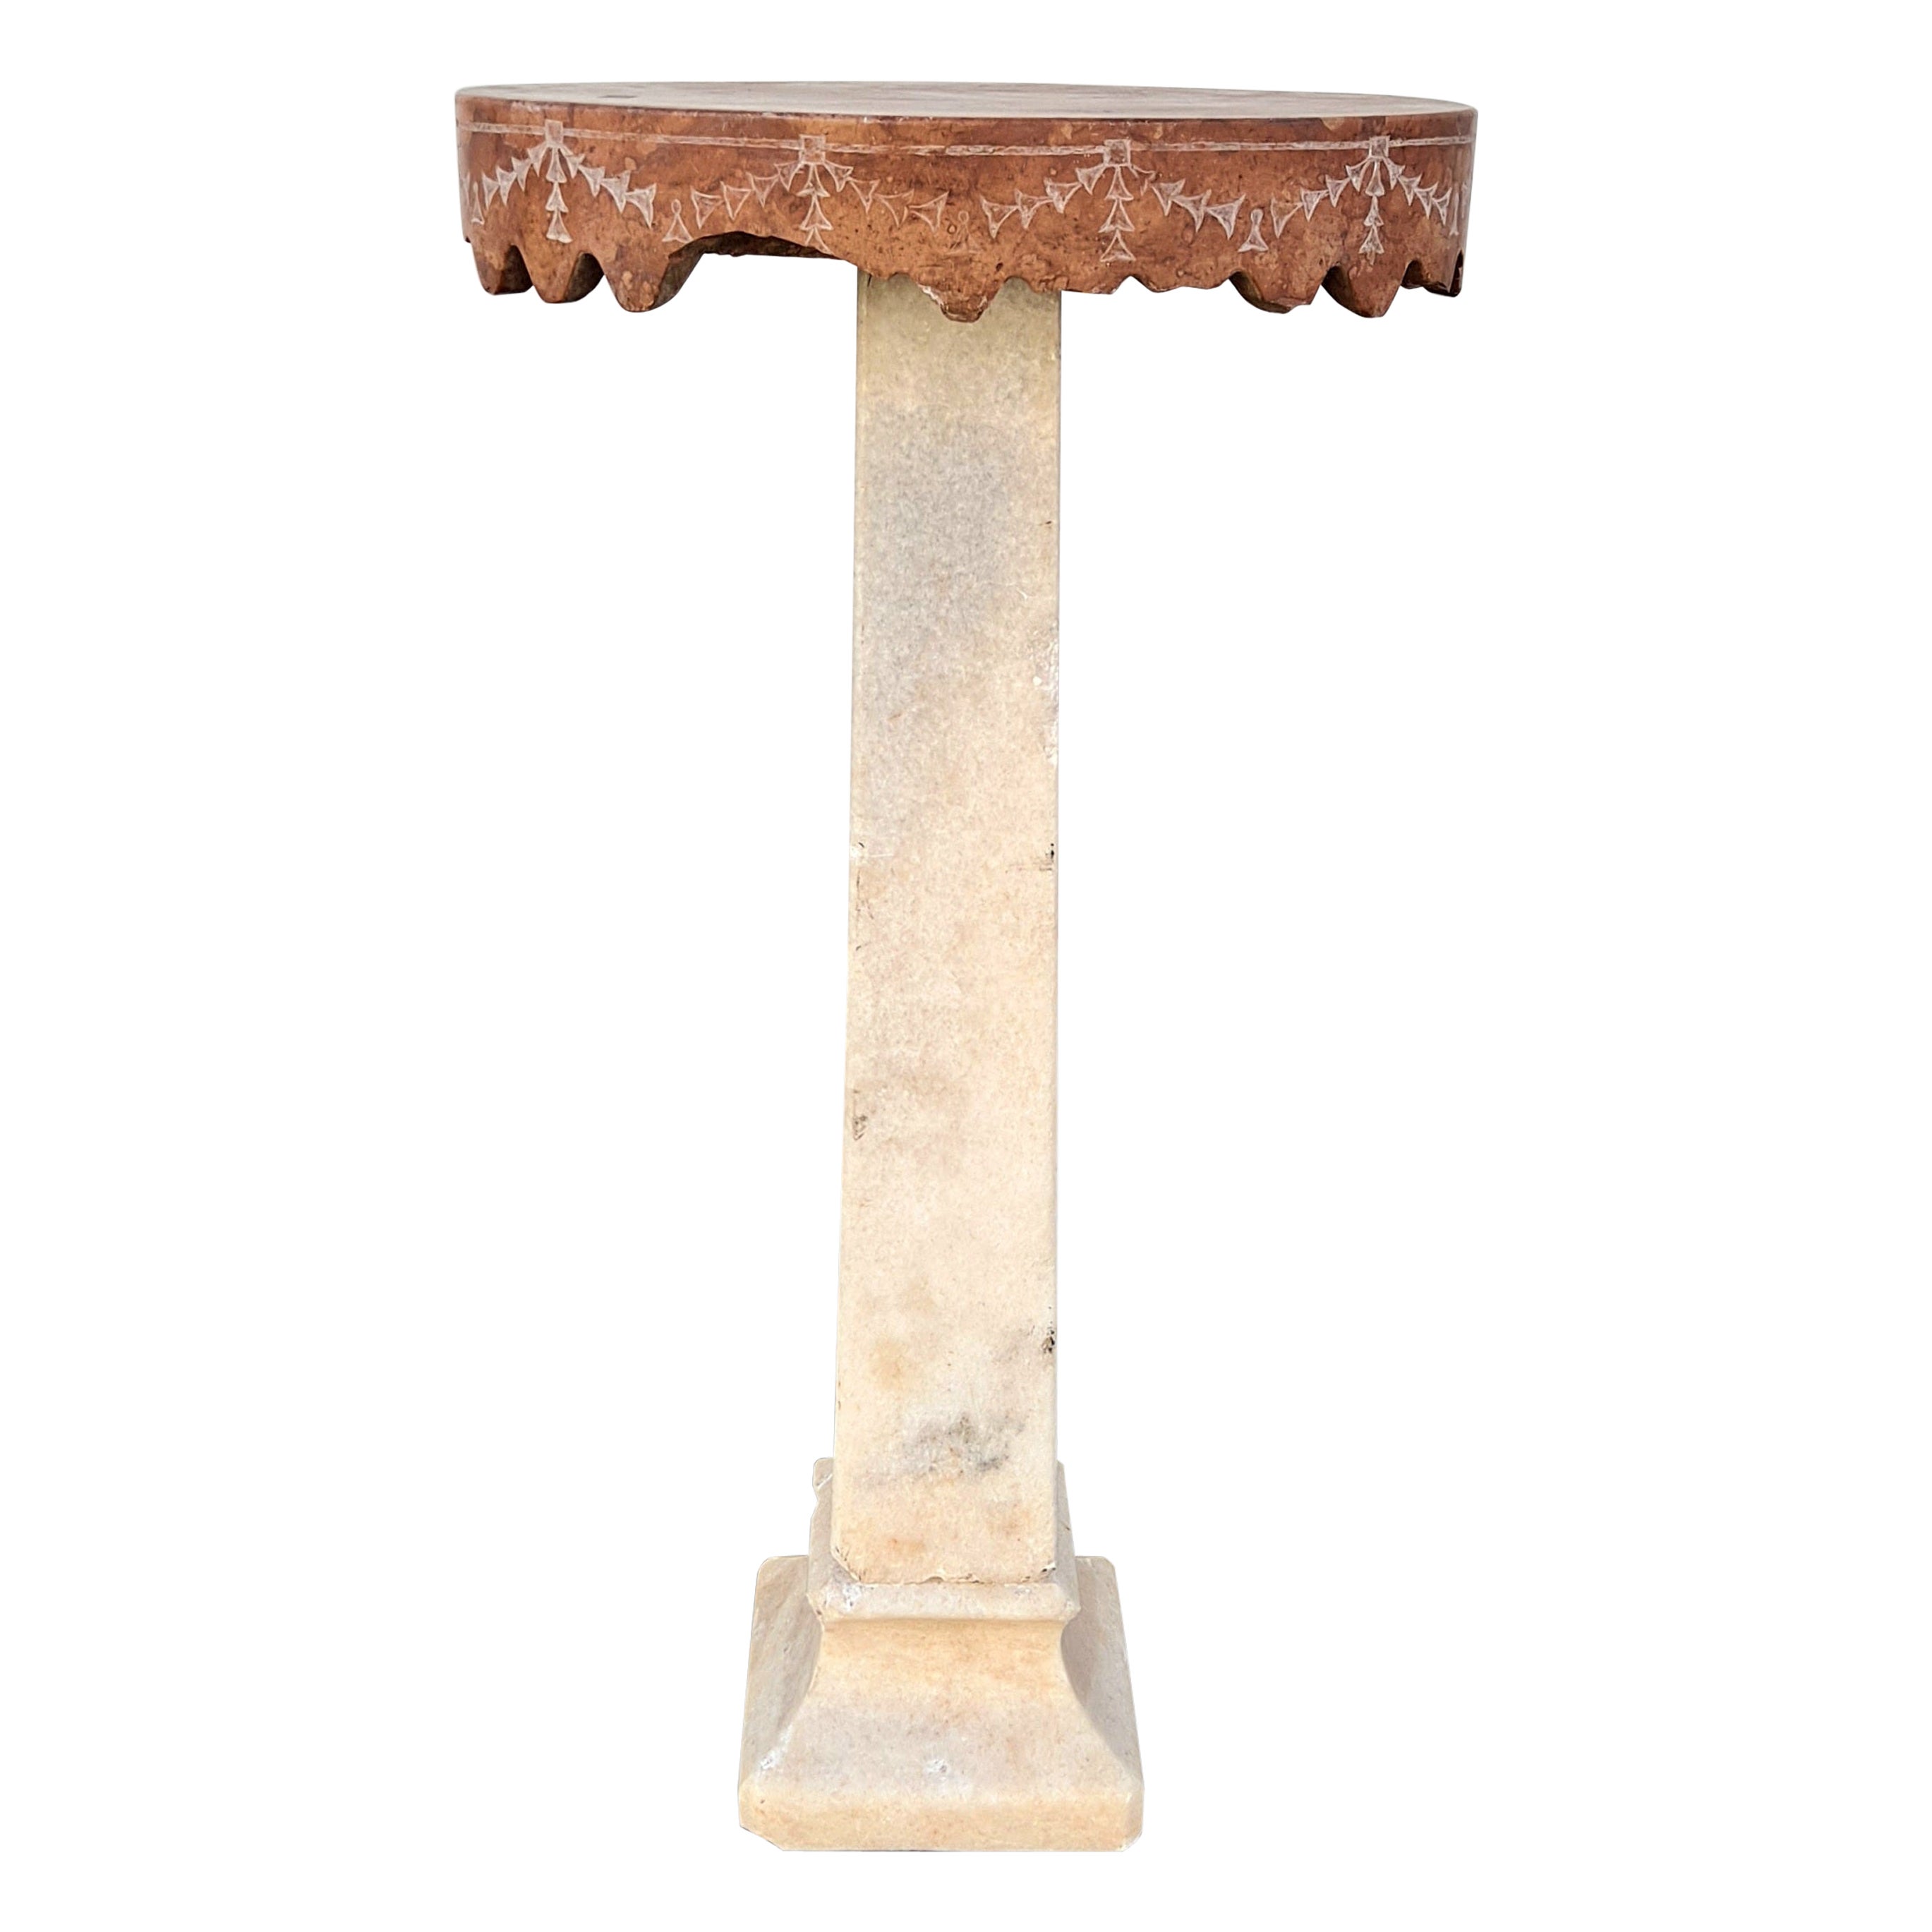 Art Deco Italian side table - Pedestals For Sale